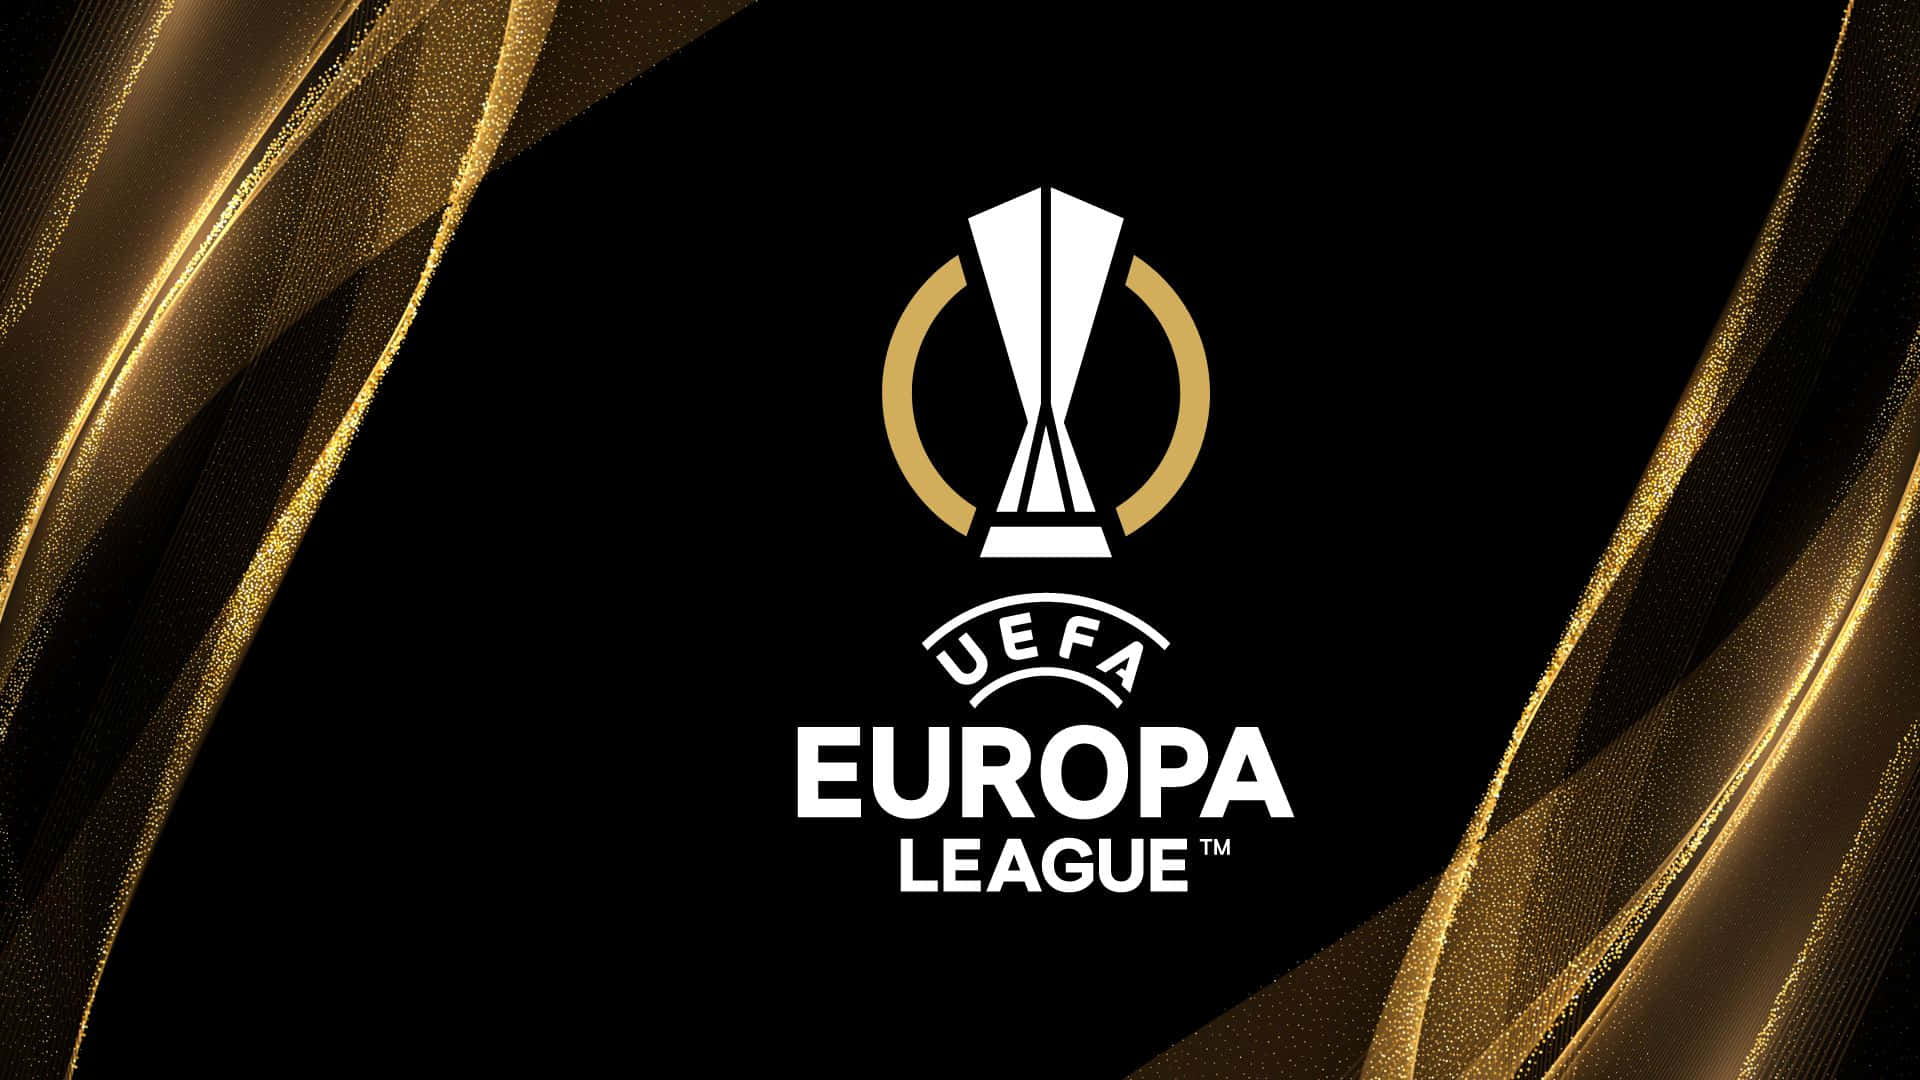 Europa League Wallpaper